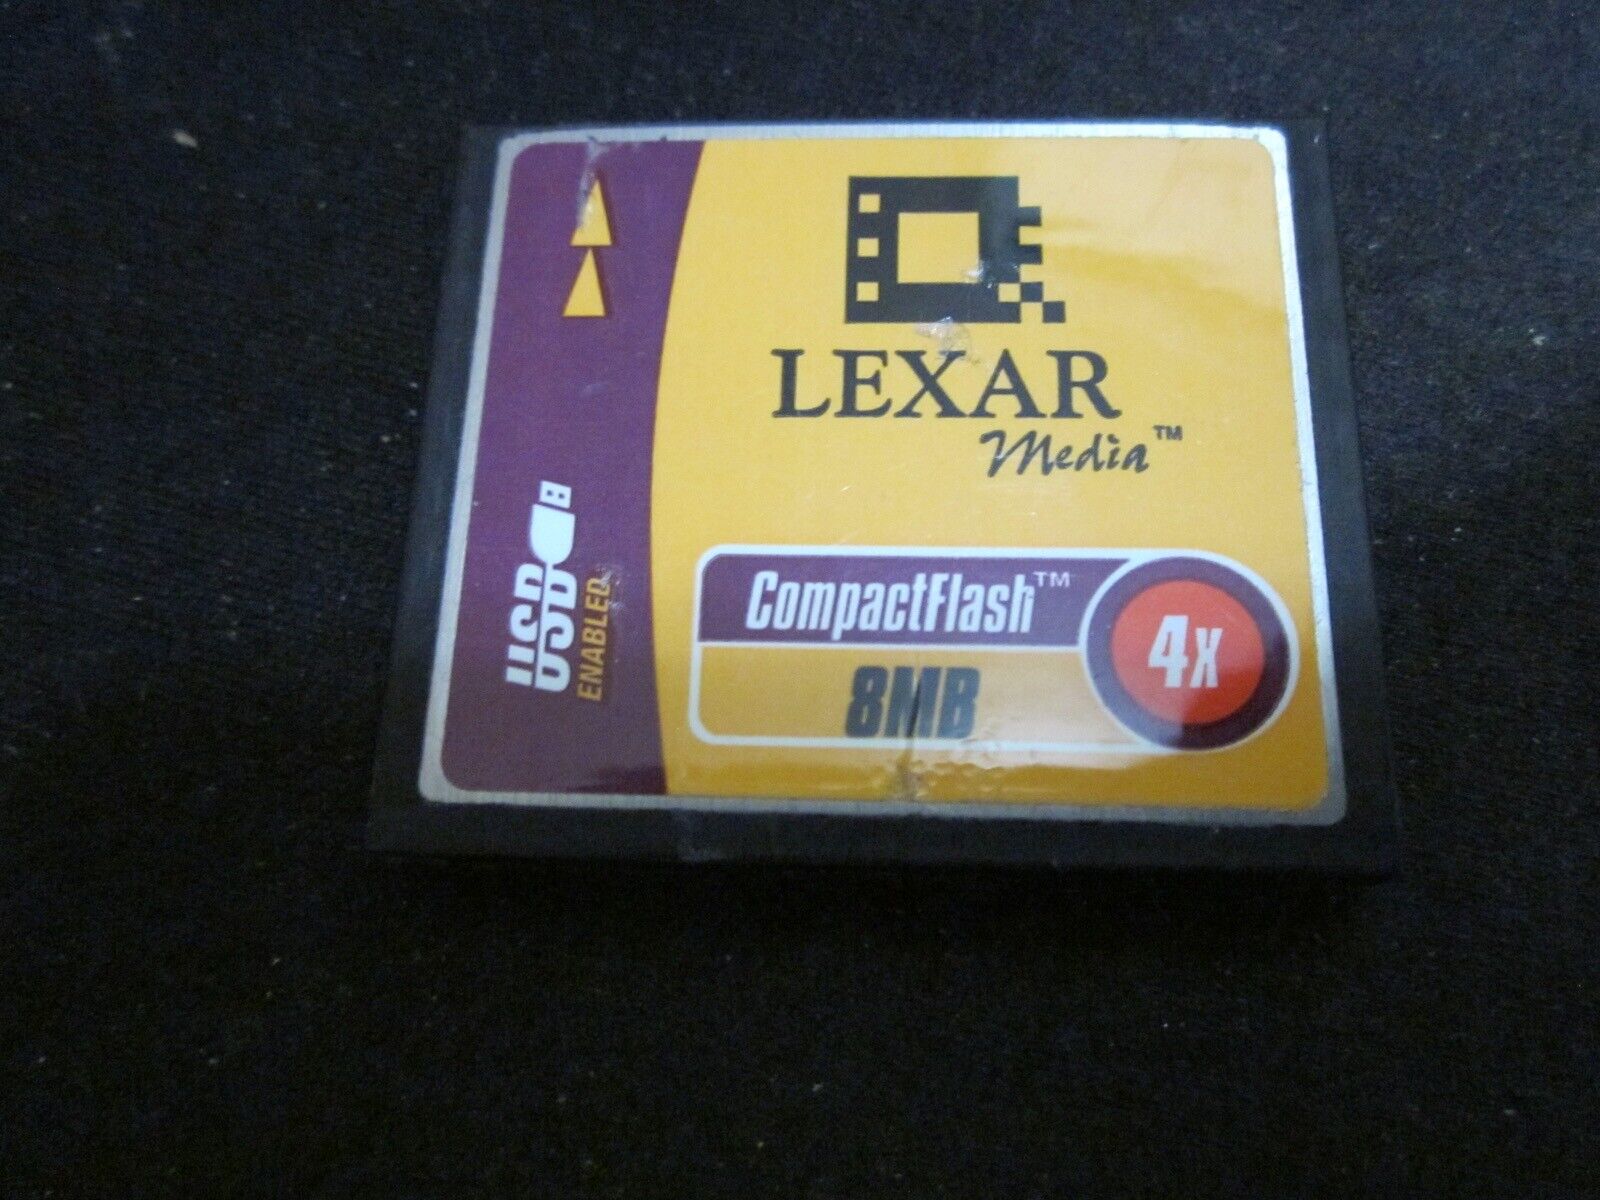 Lexar Media Compact Flash 8 MB 4X Memory